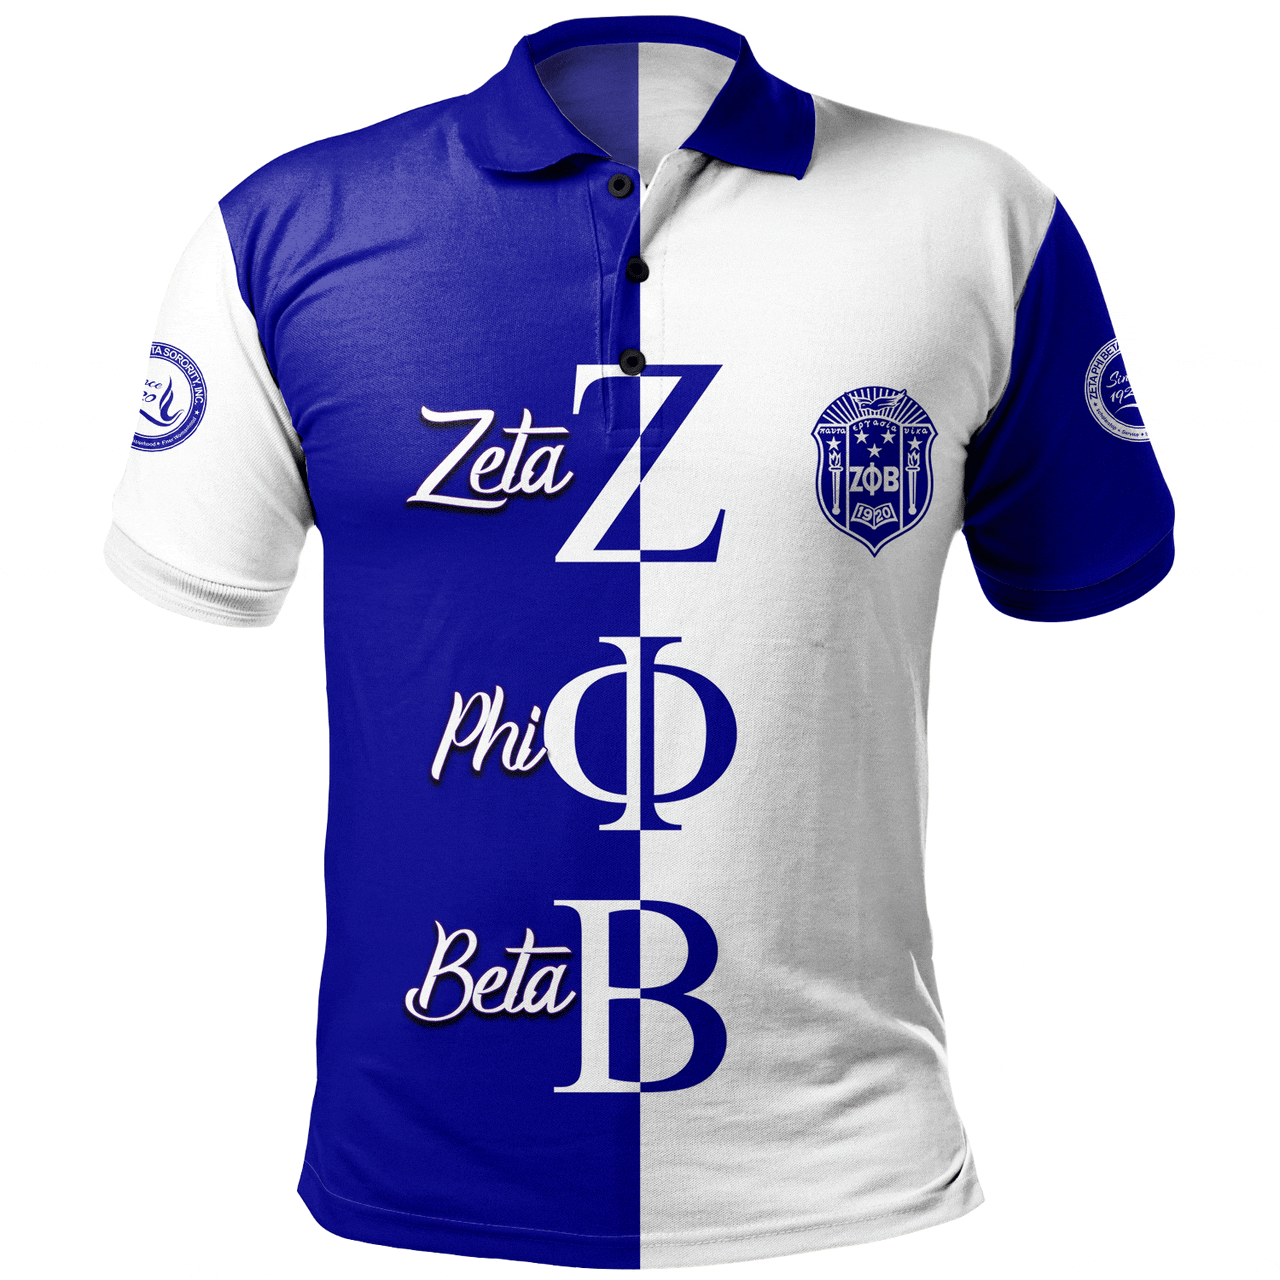 Zeta Phi Beta Polo Shirt Half Style